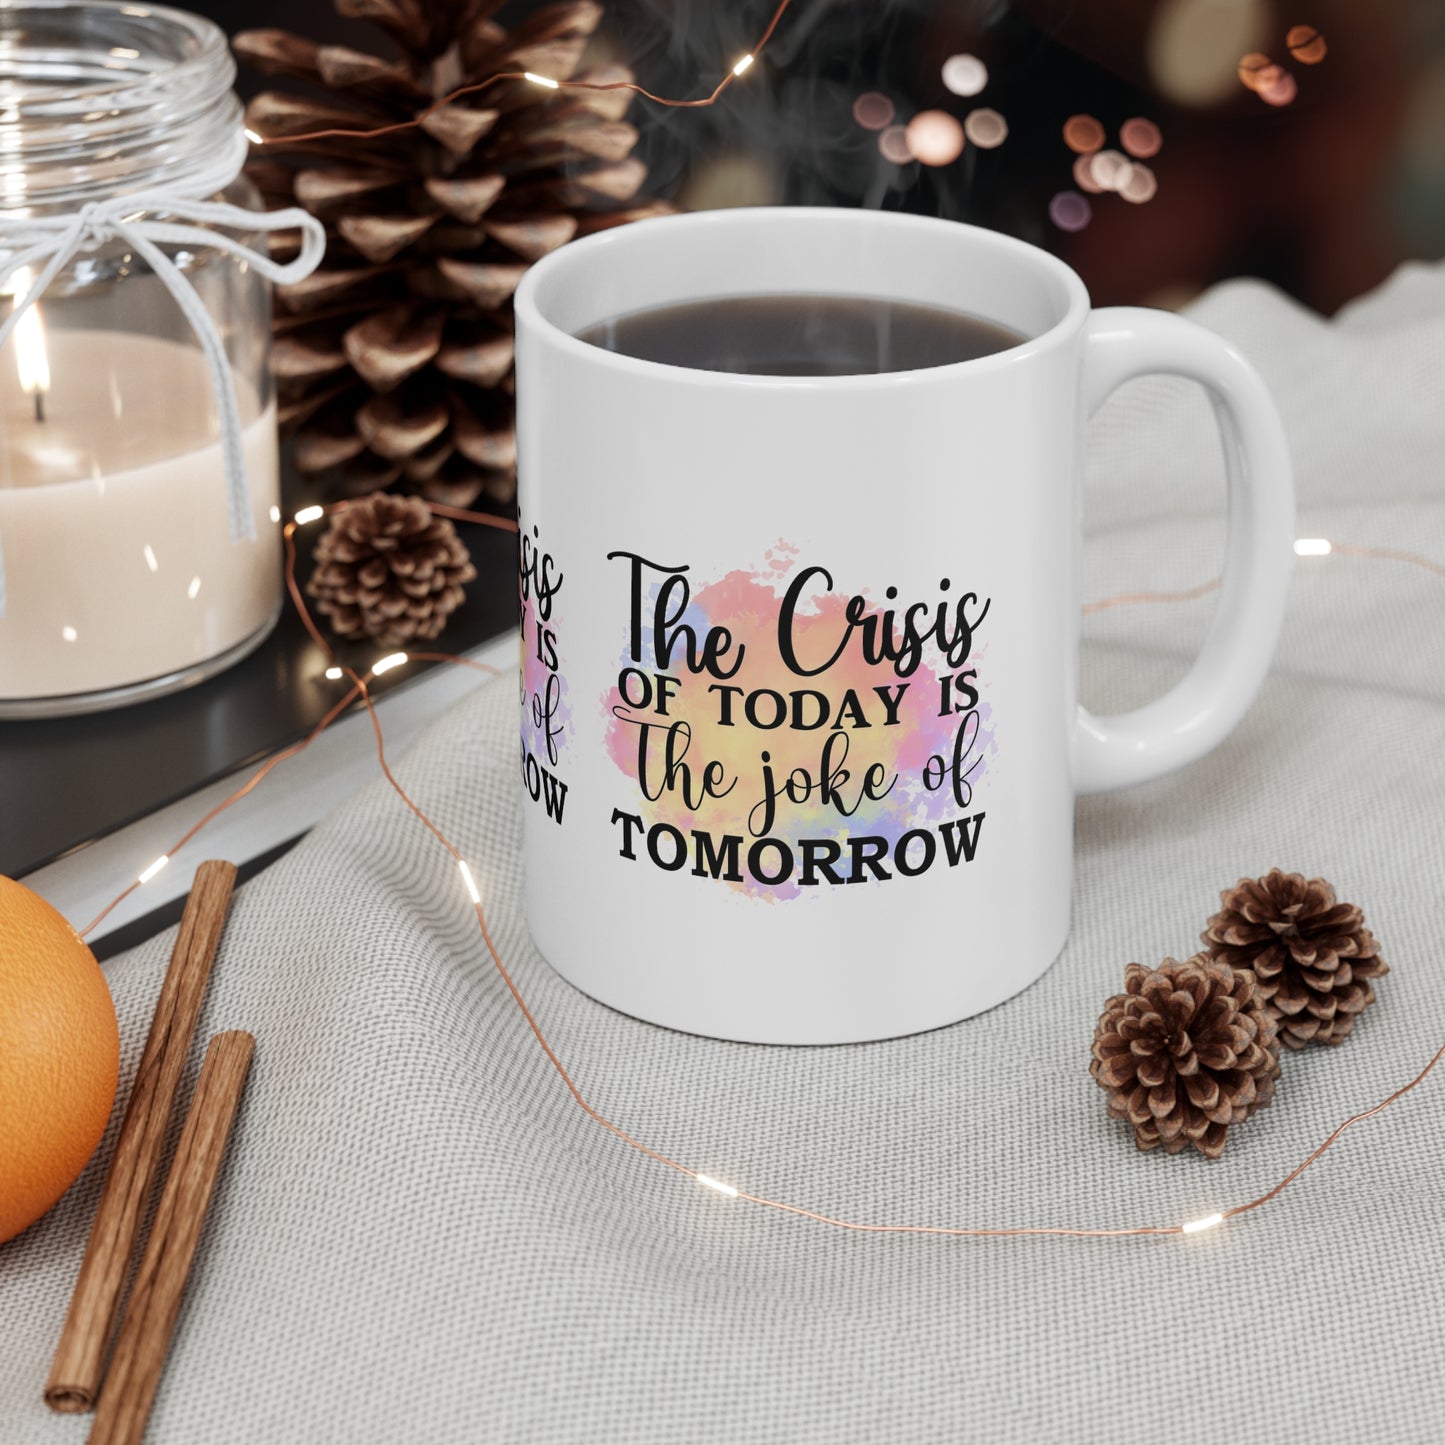 "The Crisis of Today is the Joke of Tomorrow" Inspirational Mug - MUGSCITY23™️ Free Shipping